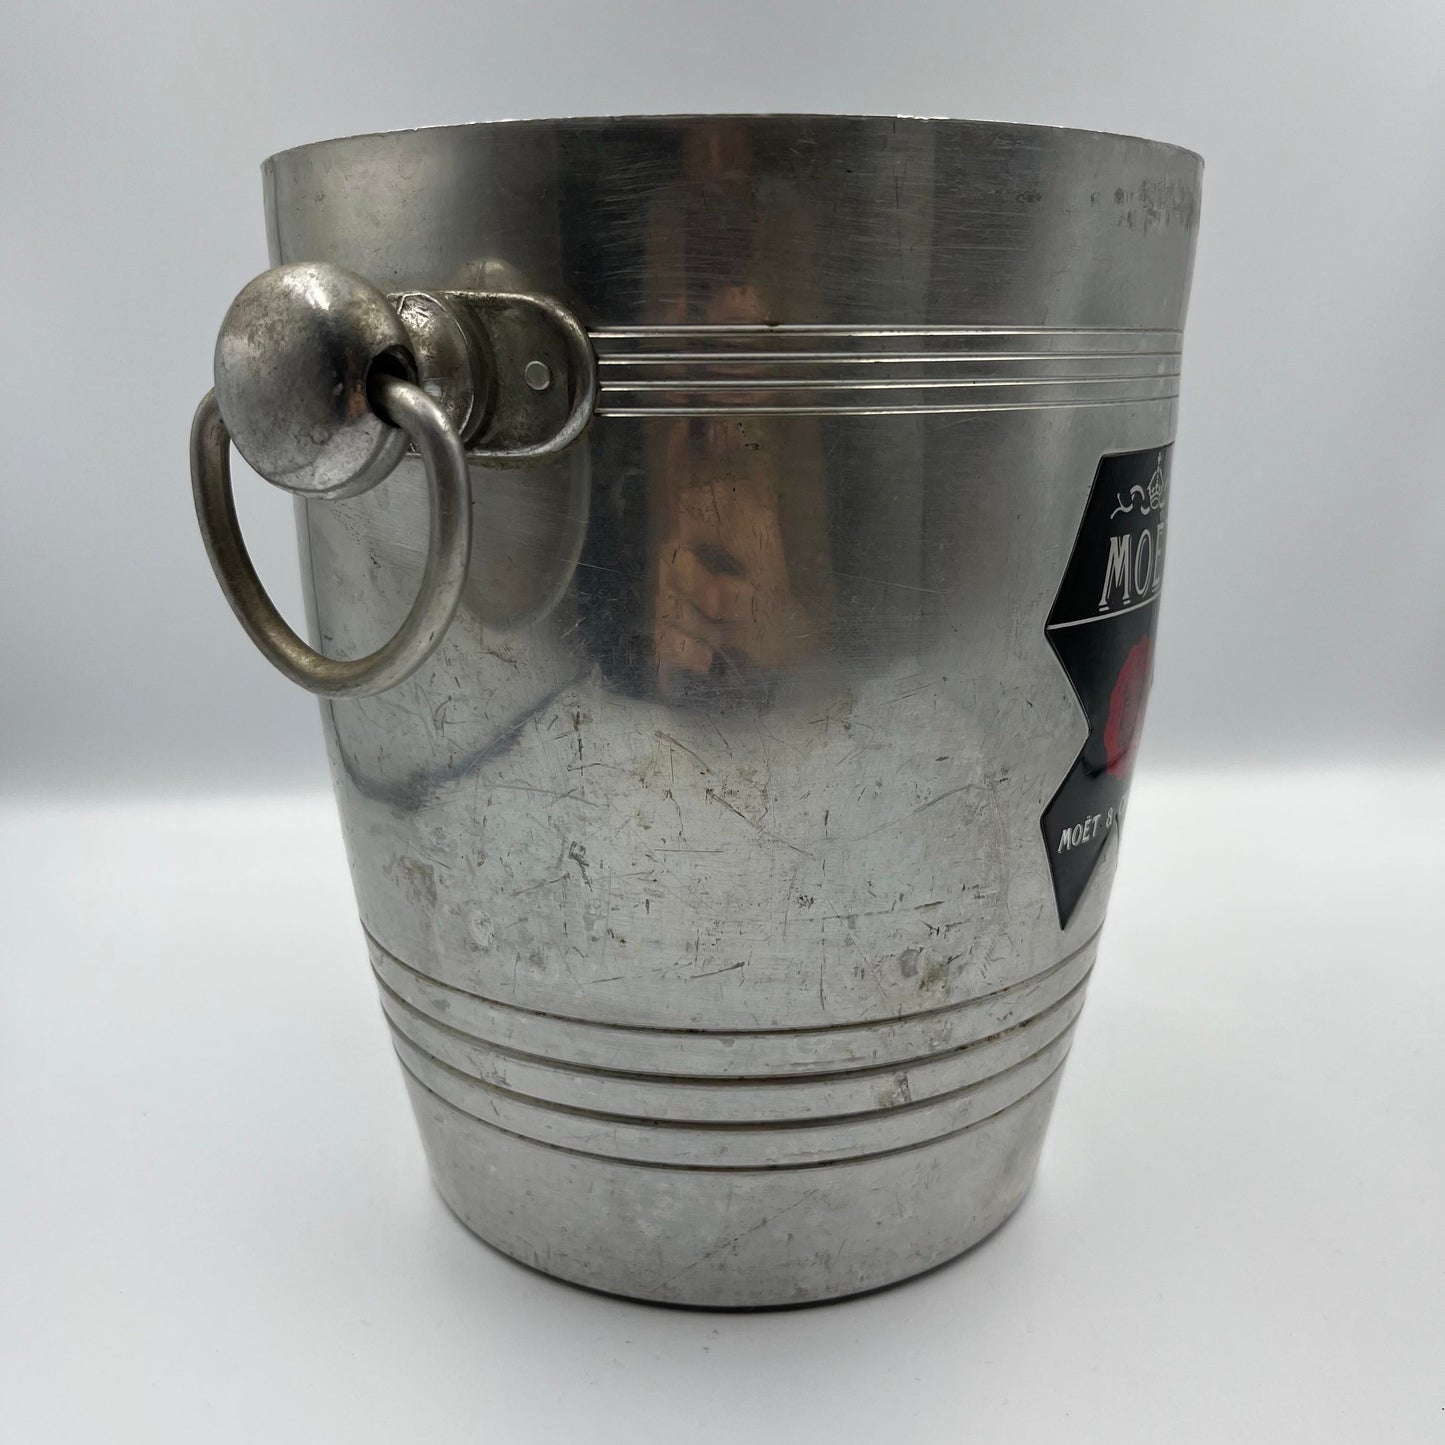 Vintage Moët & Chandon Ice Bucket